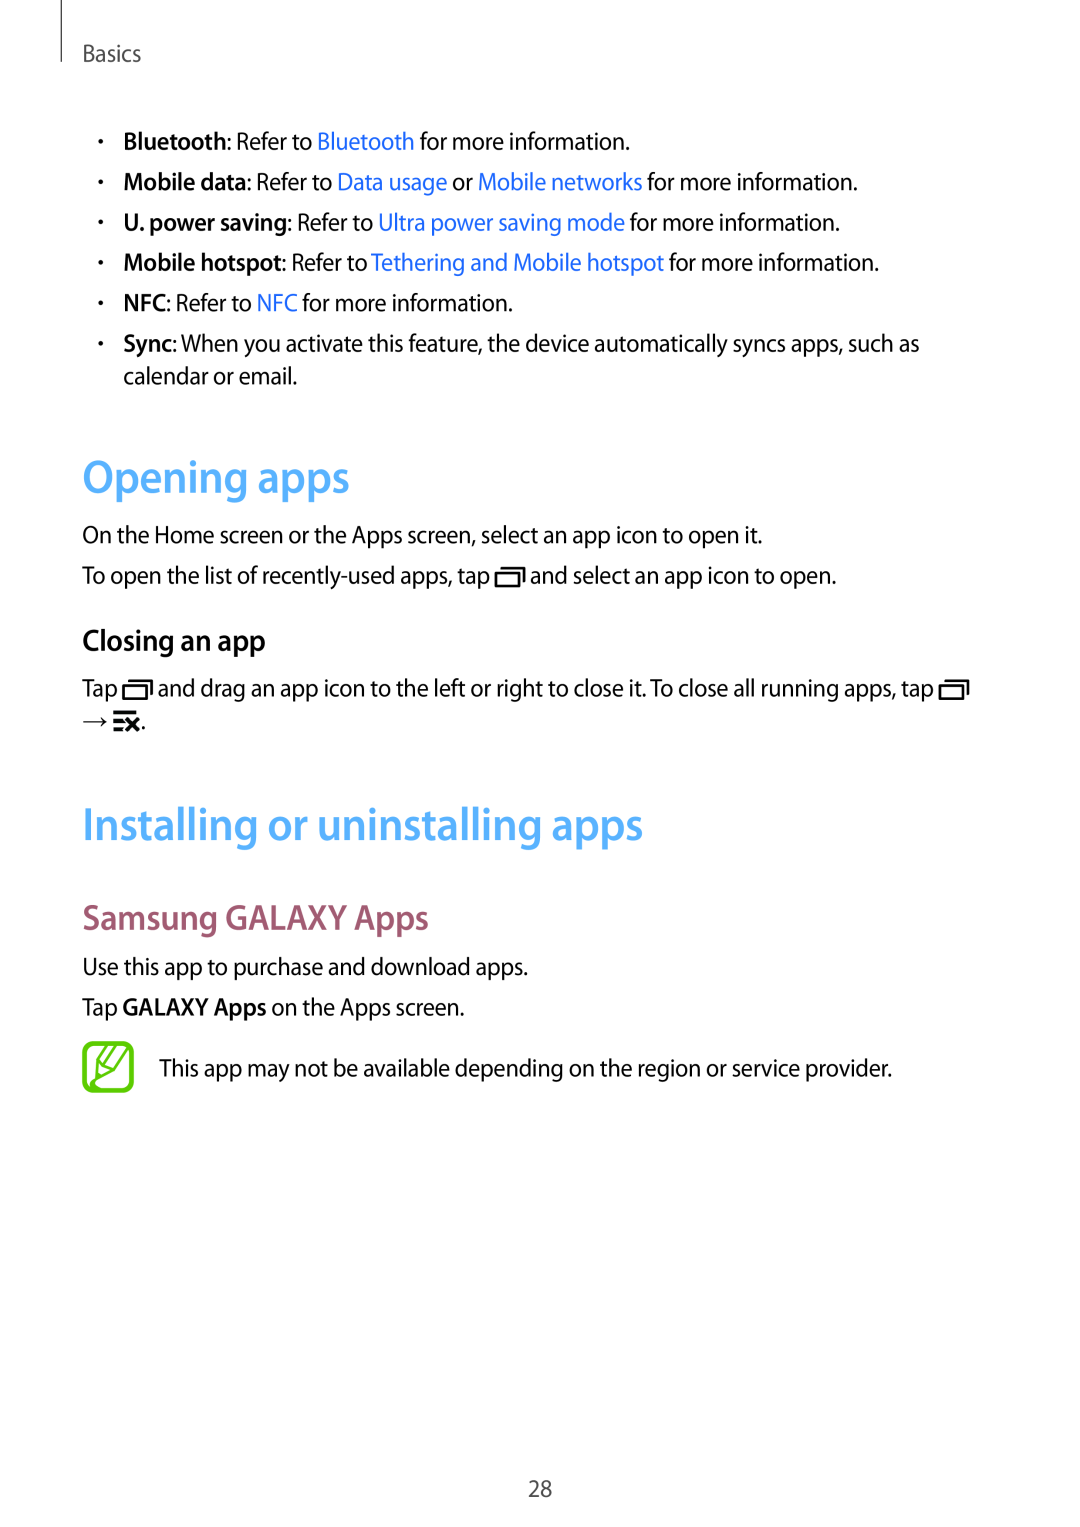 Samsung SM-G357FZWZOMN manual Opening apps, Installing or uninstalling apps, Samsung GALAXY Apps, Closing an app, Basics 